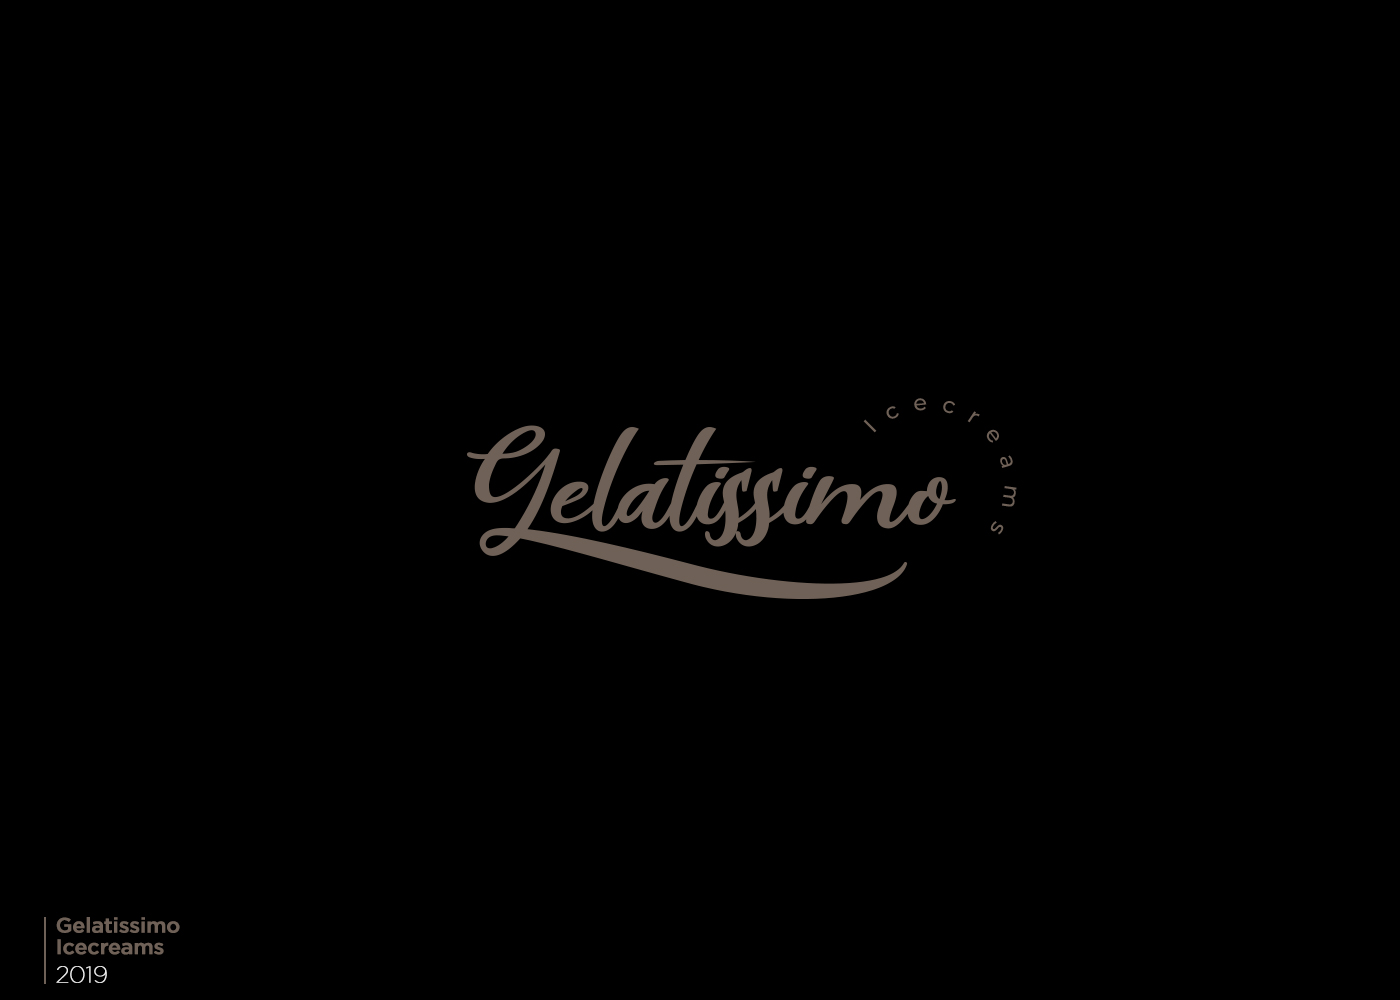 Gelatissimo logo and branding